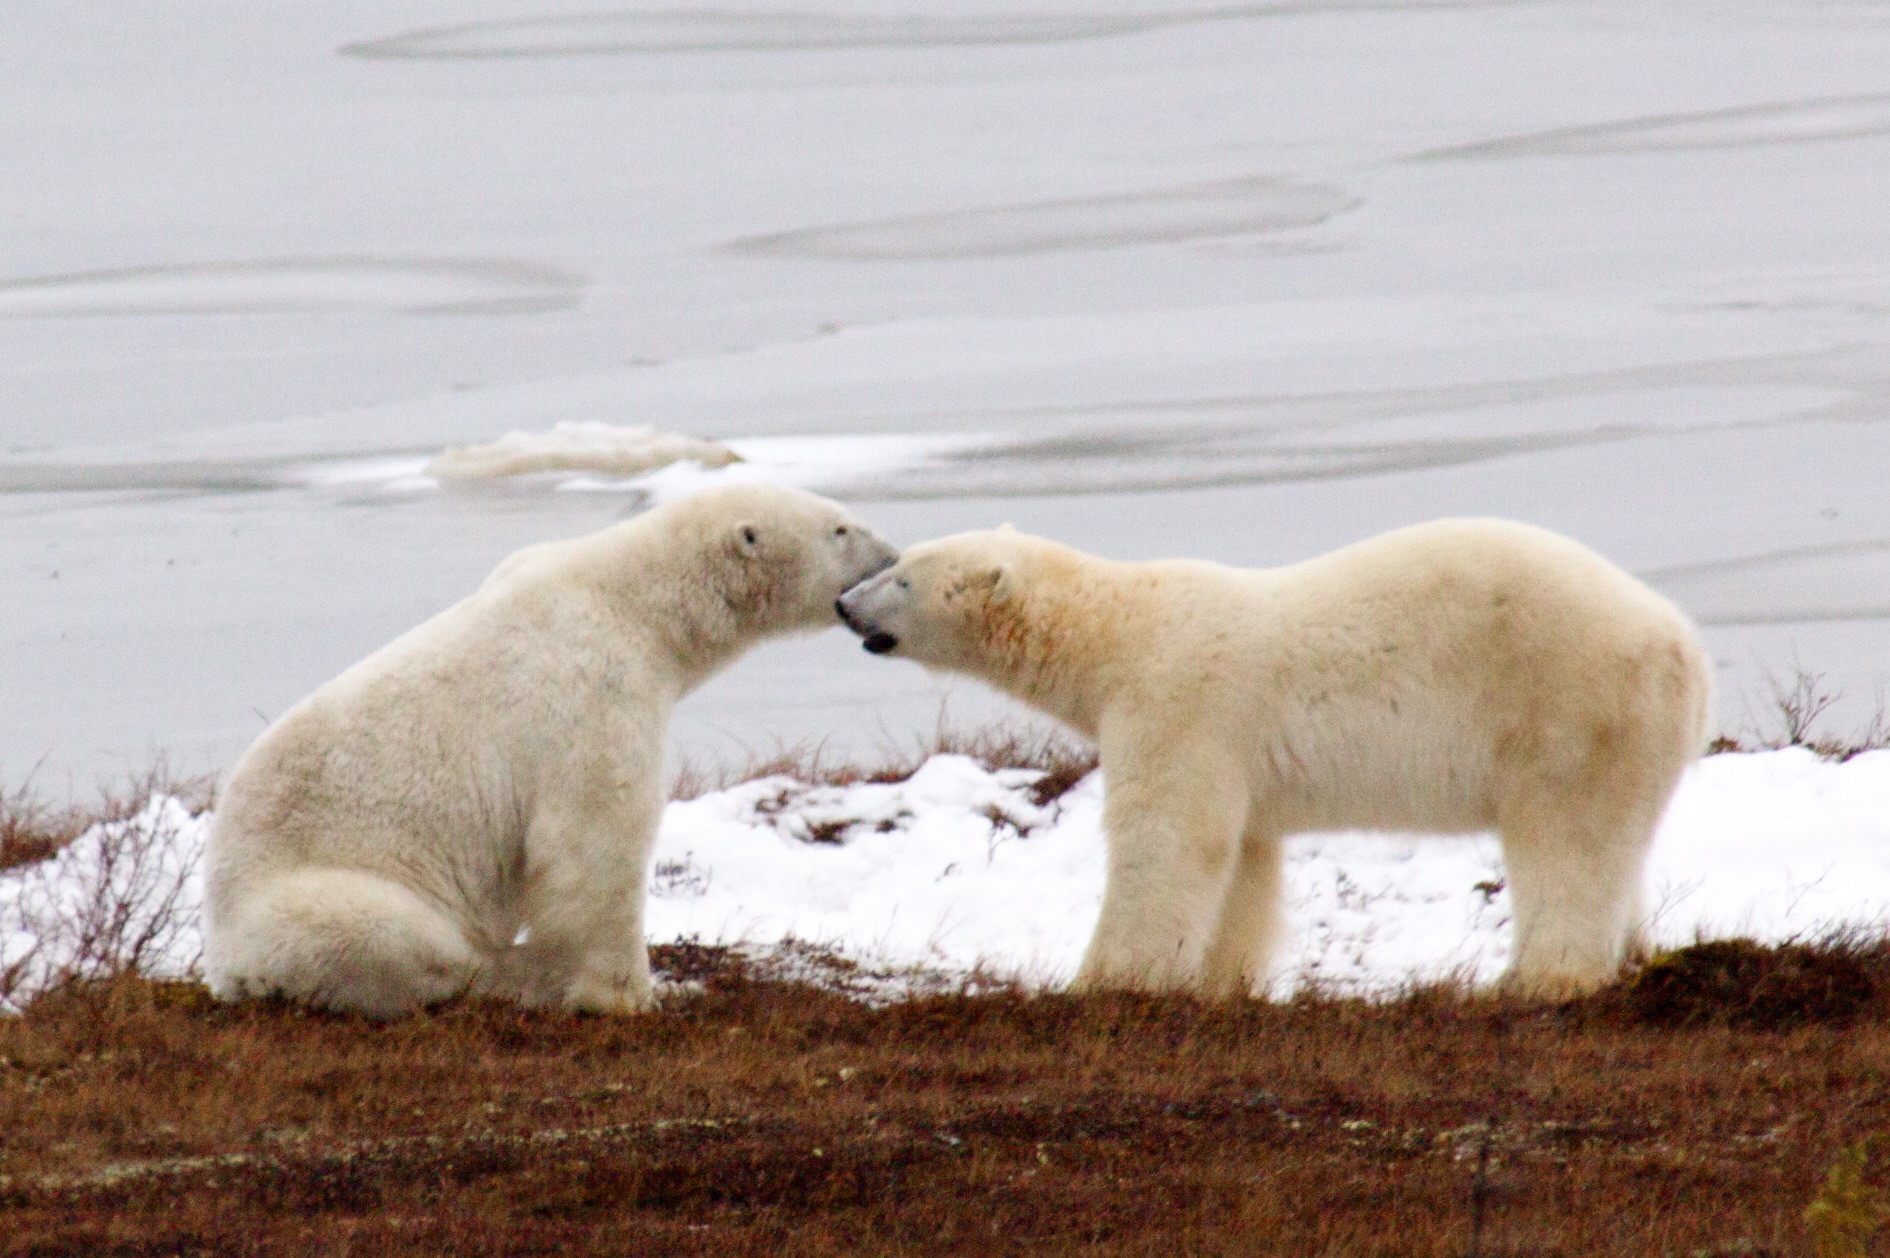 19. Polar bears greet with their noses